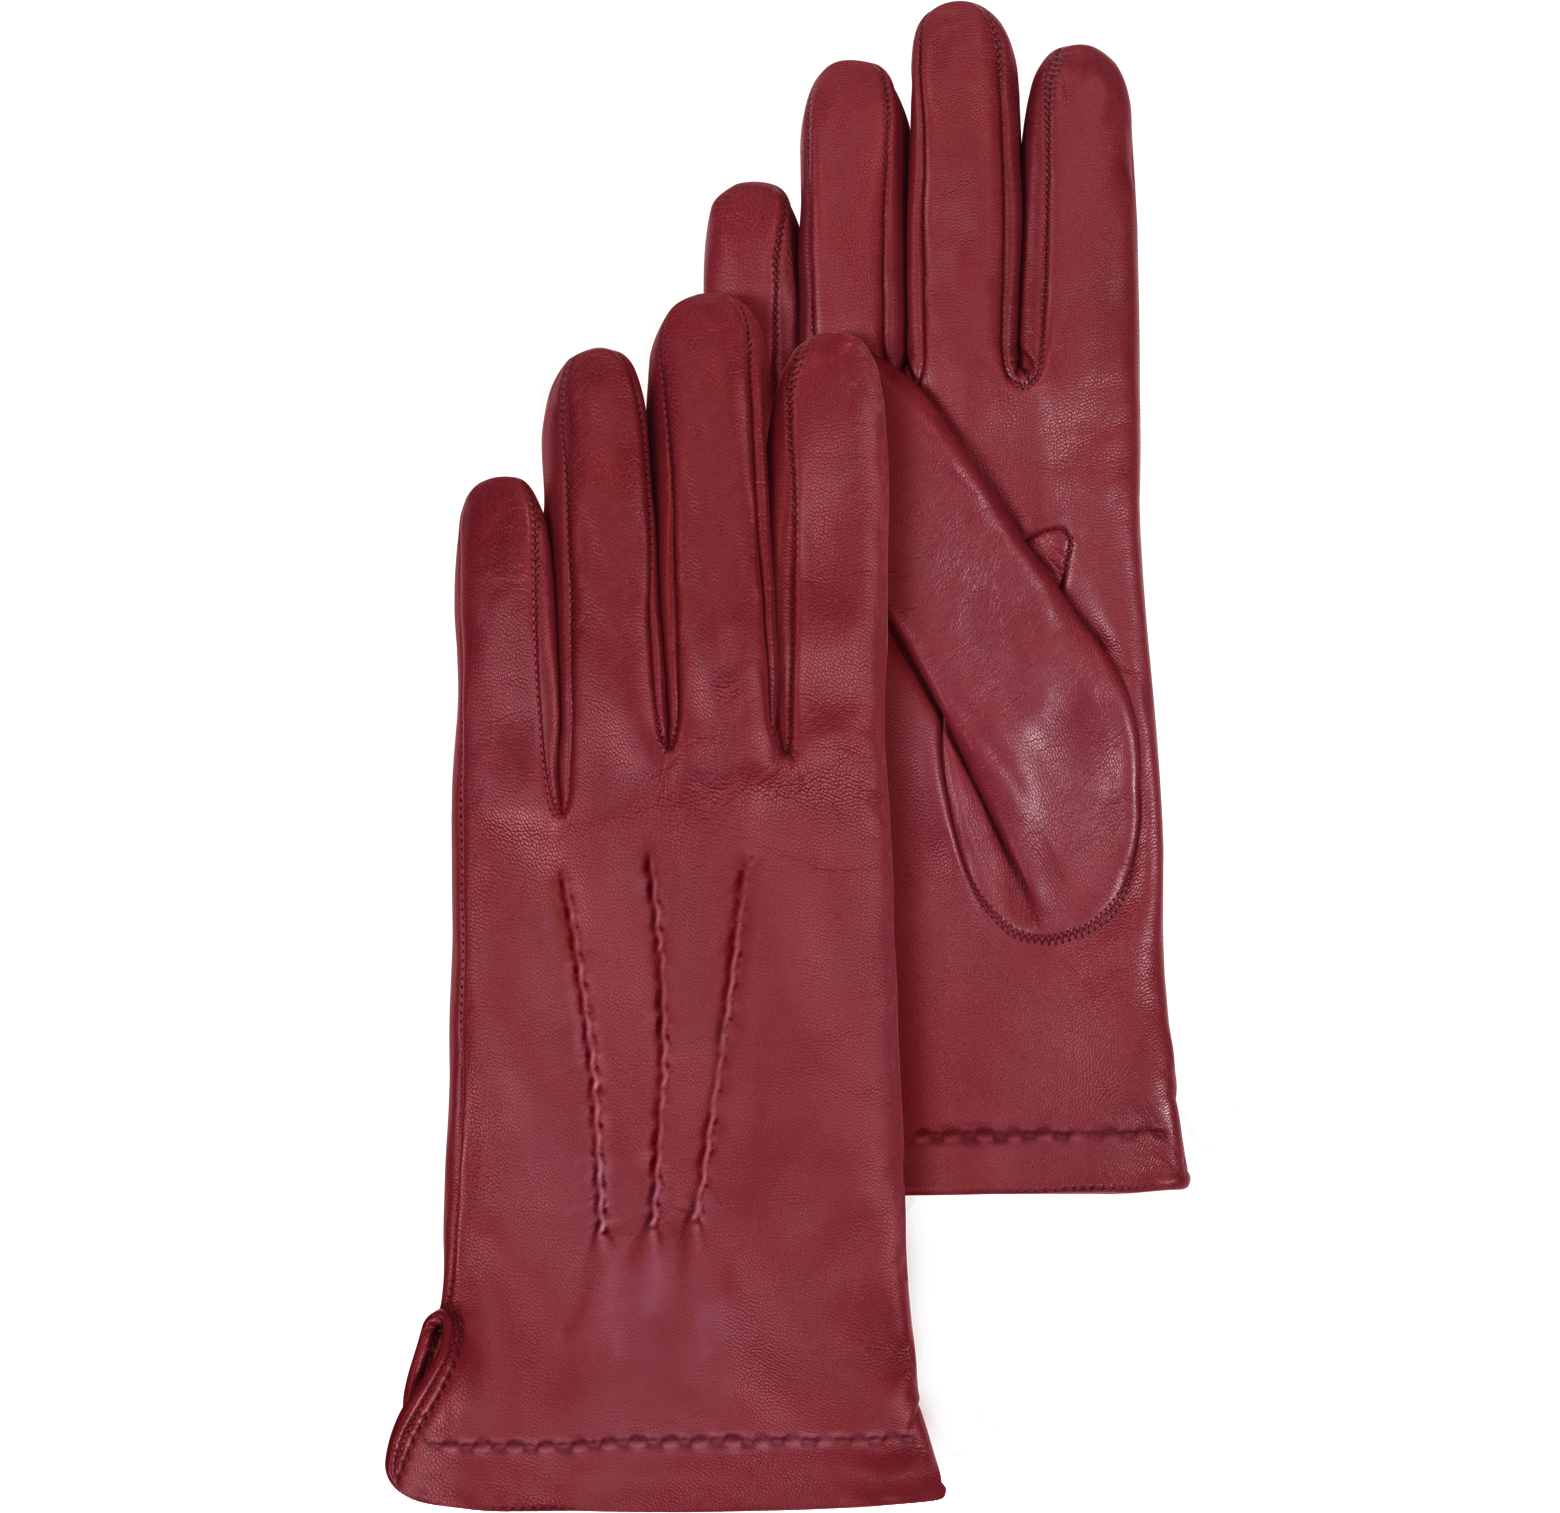 Forzieri Burgundy Leather Women's Gloves w/Cashmere Lining M, 7